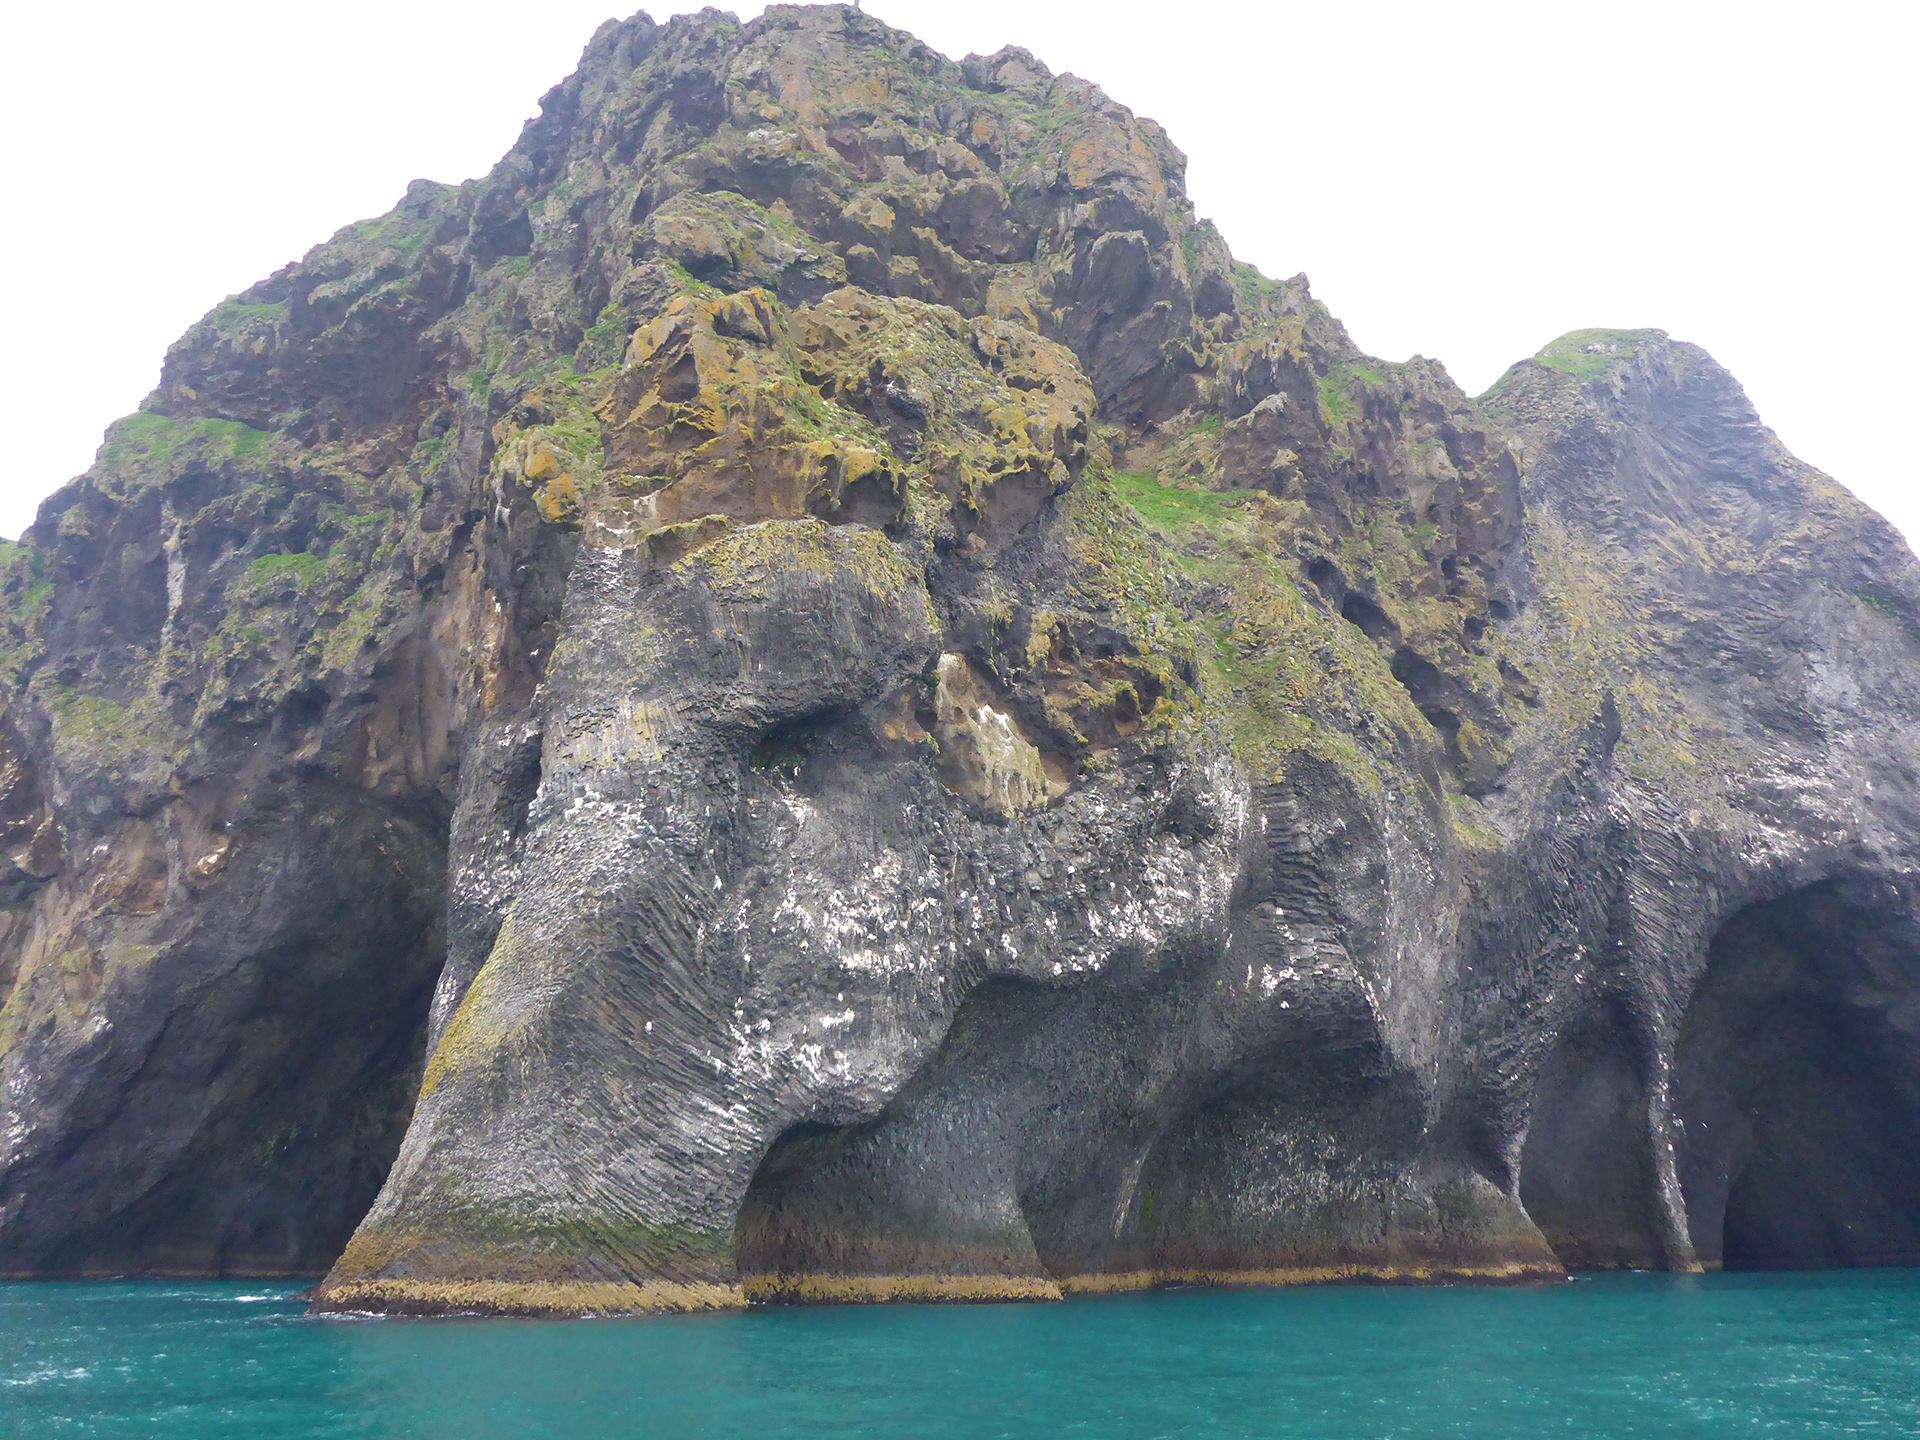 The Elephant Rock on Heimaey, Iceland